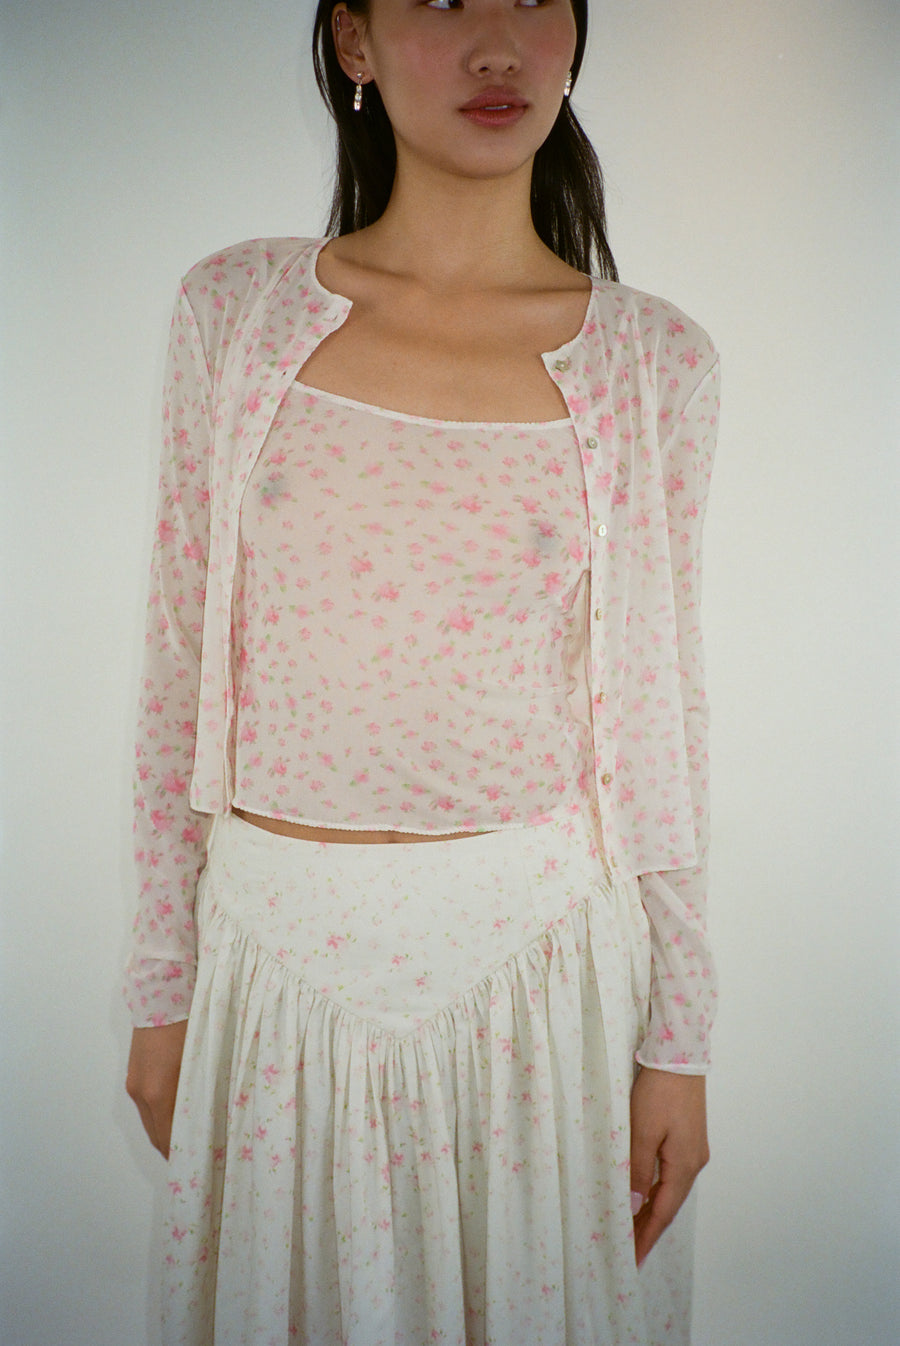 Mesh cardigan in pink floral print on model